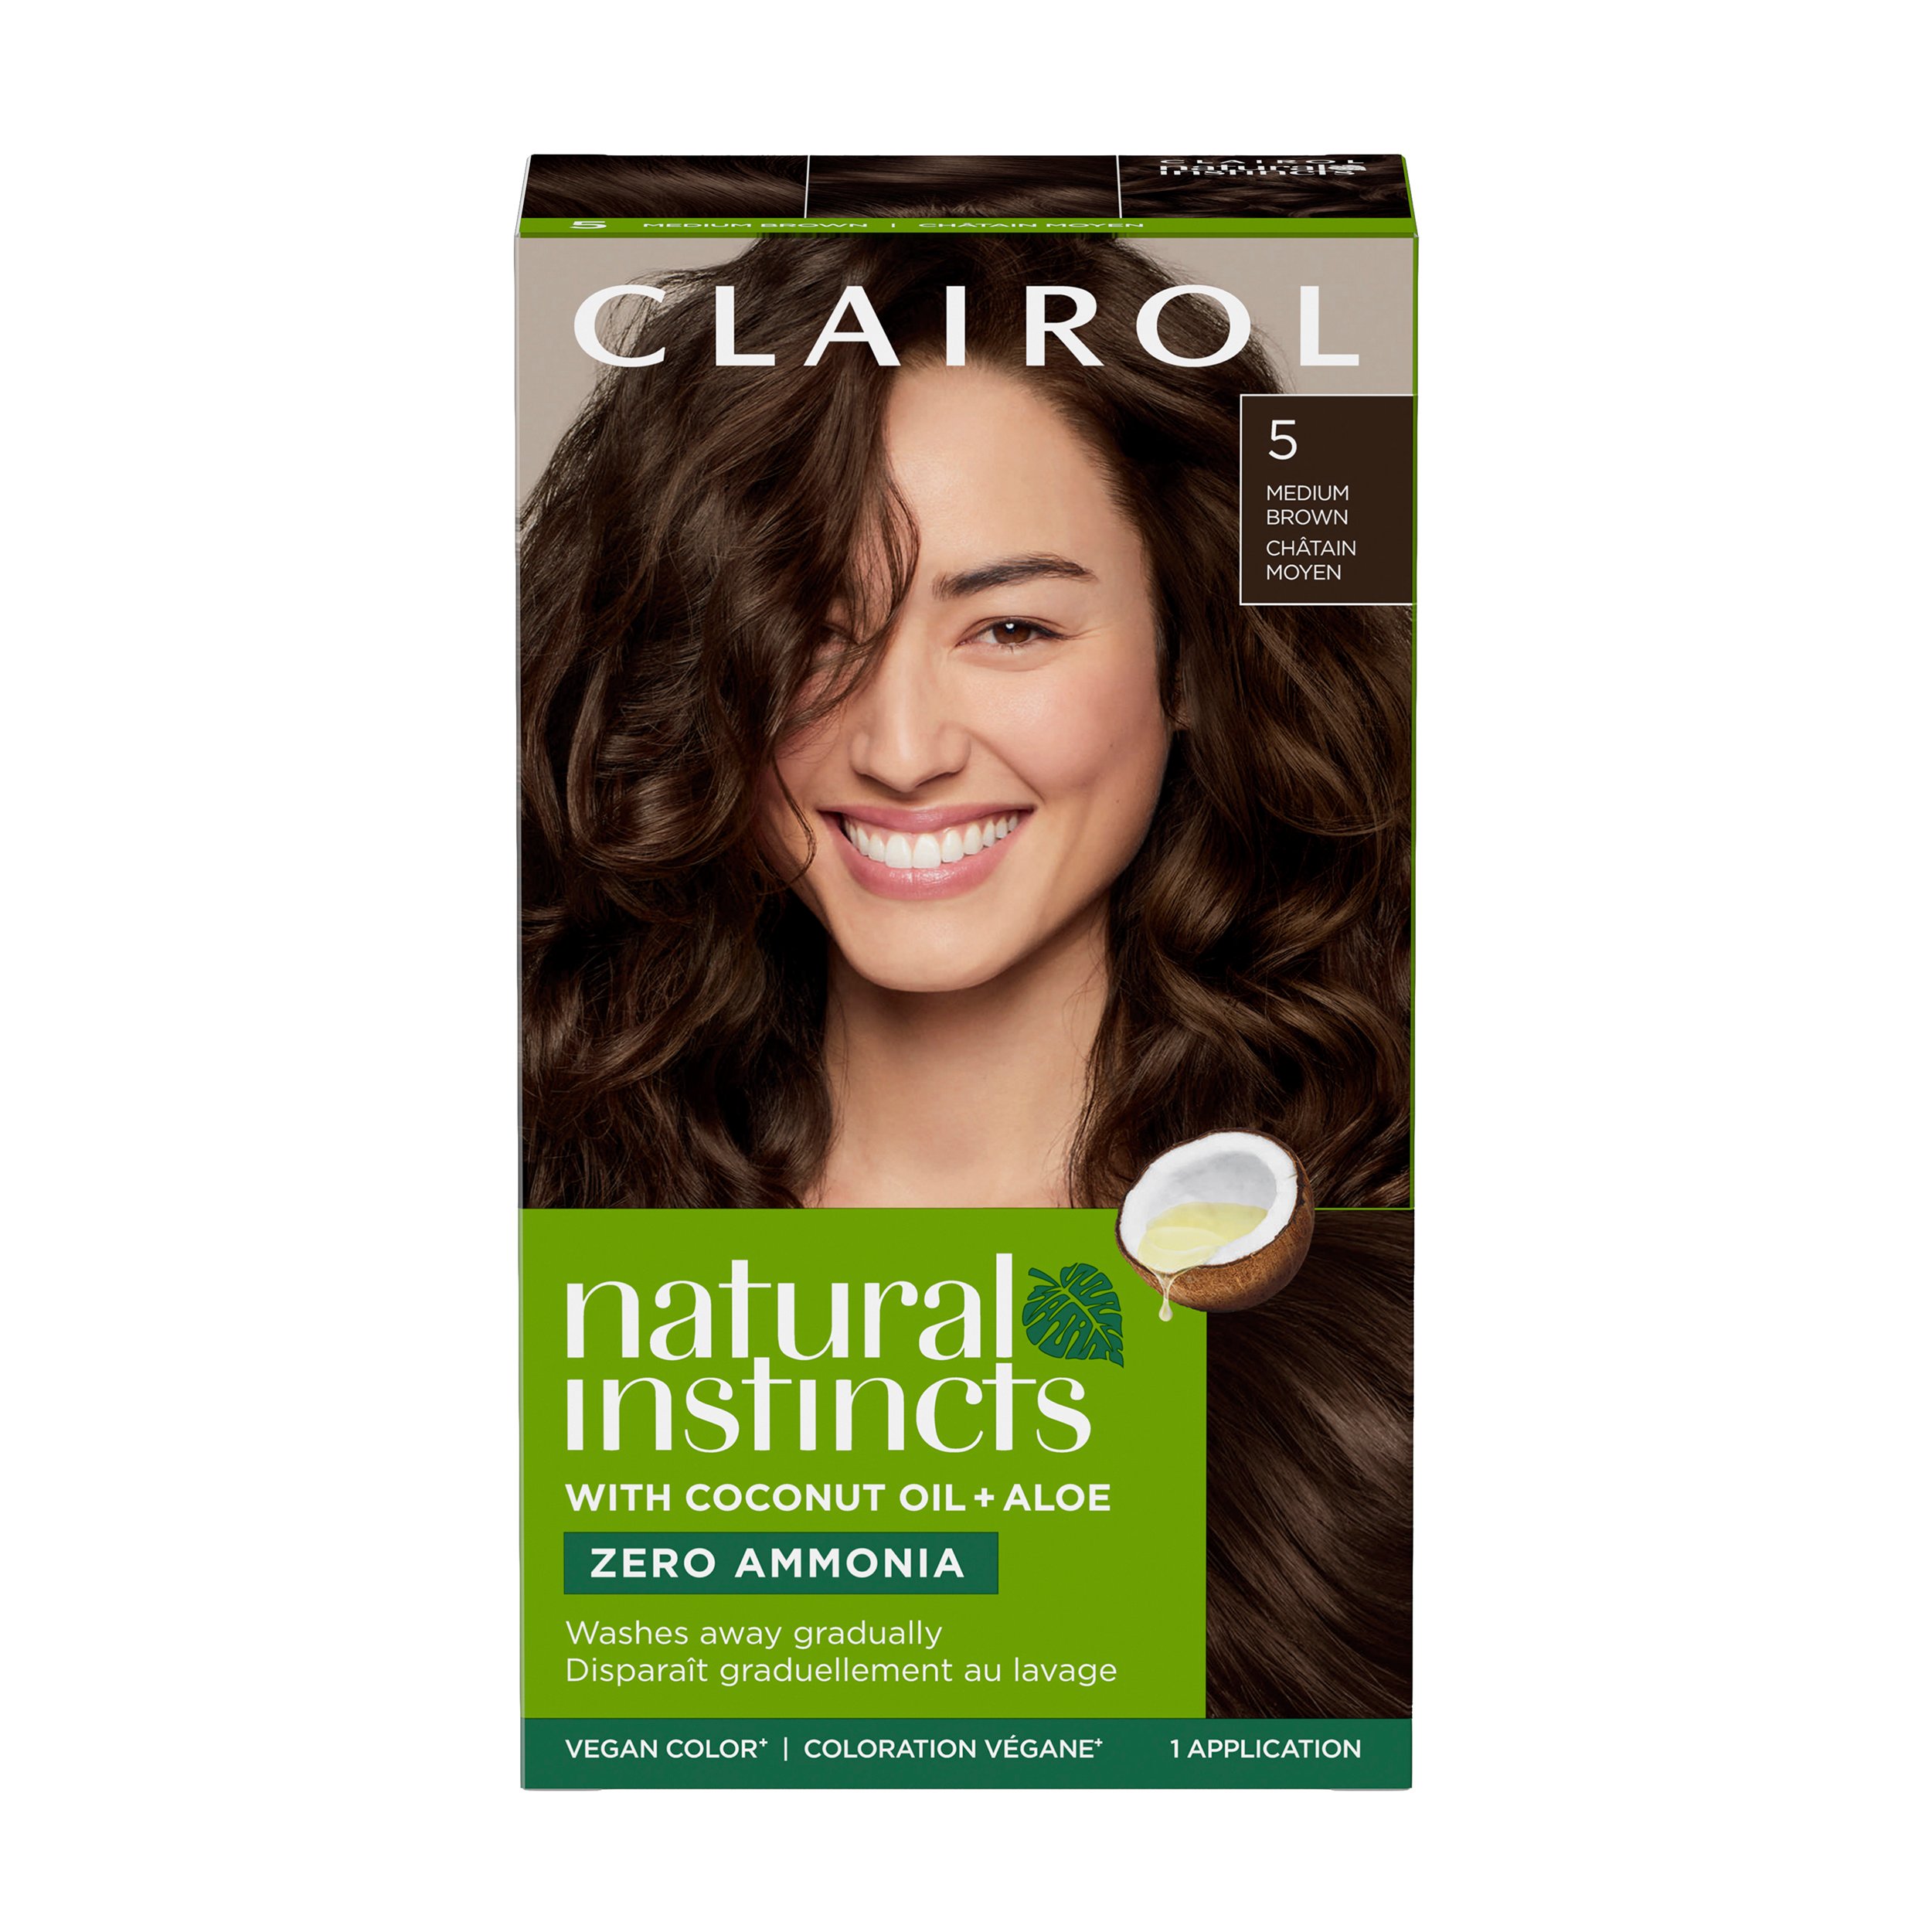 Clairol Natural Instincts Medium Brown 20 Non Permanent Color Shop Hair Color At H E B